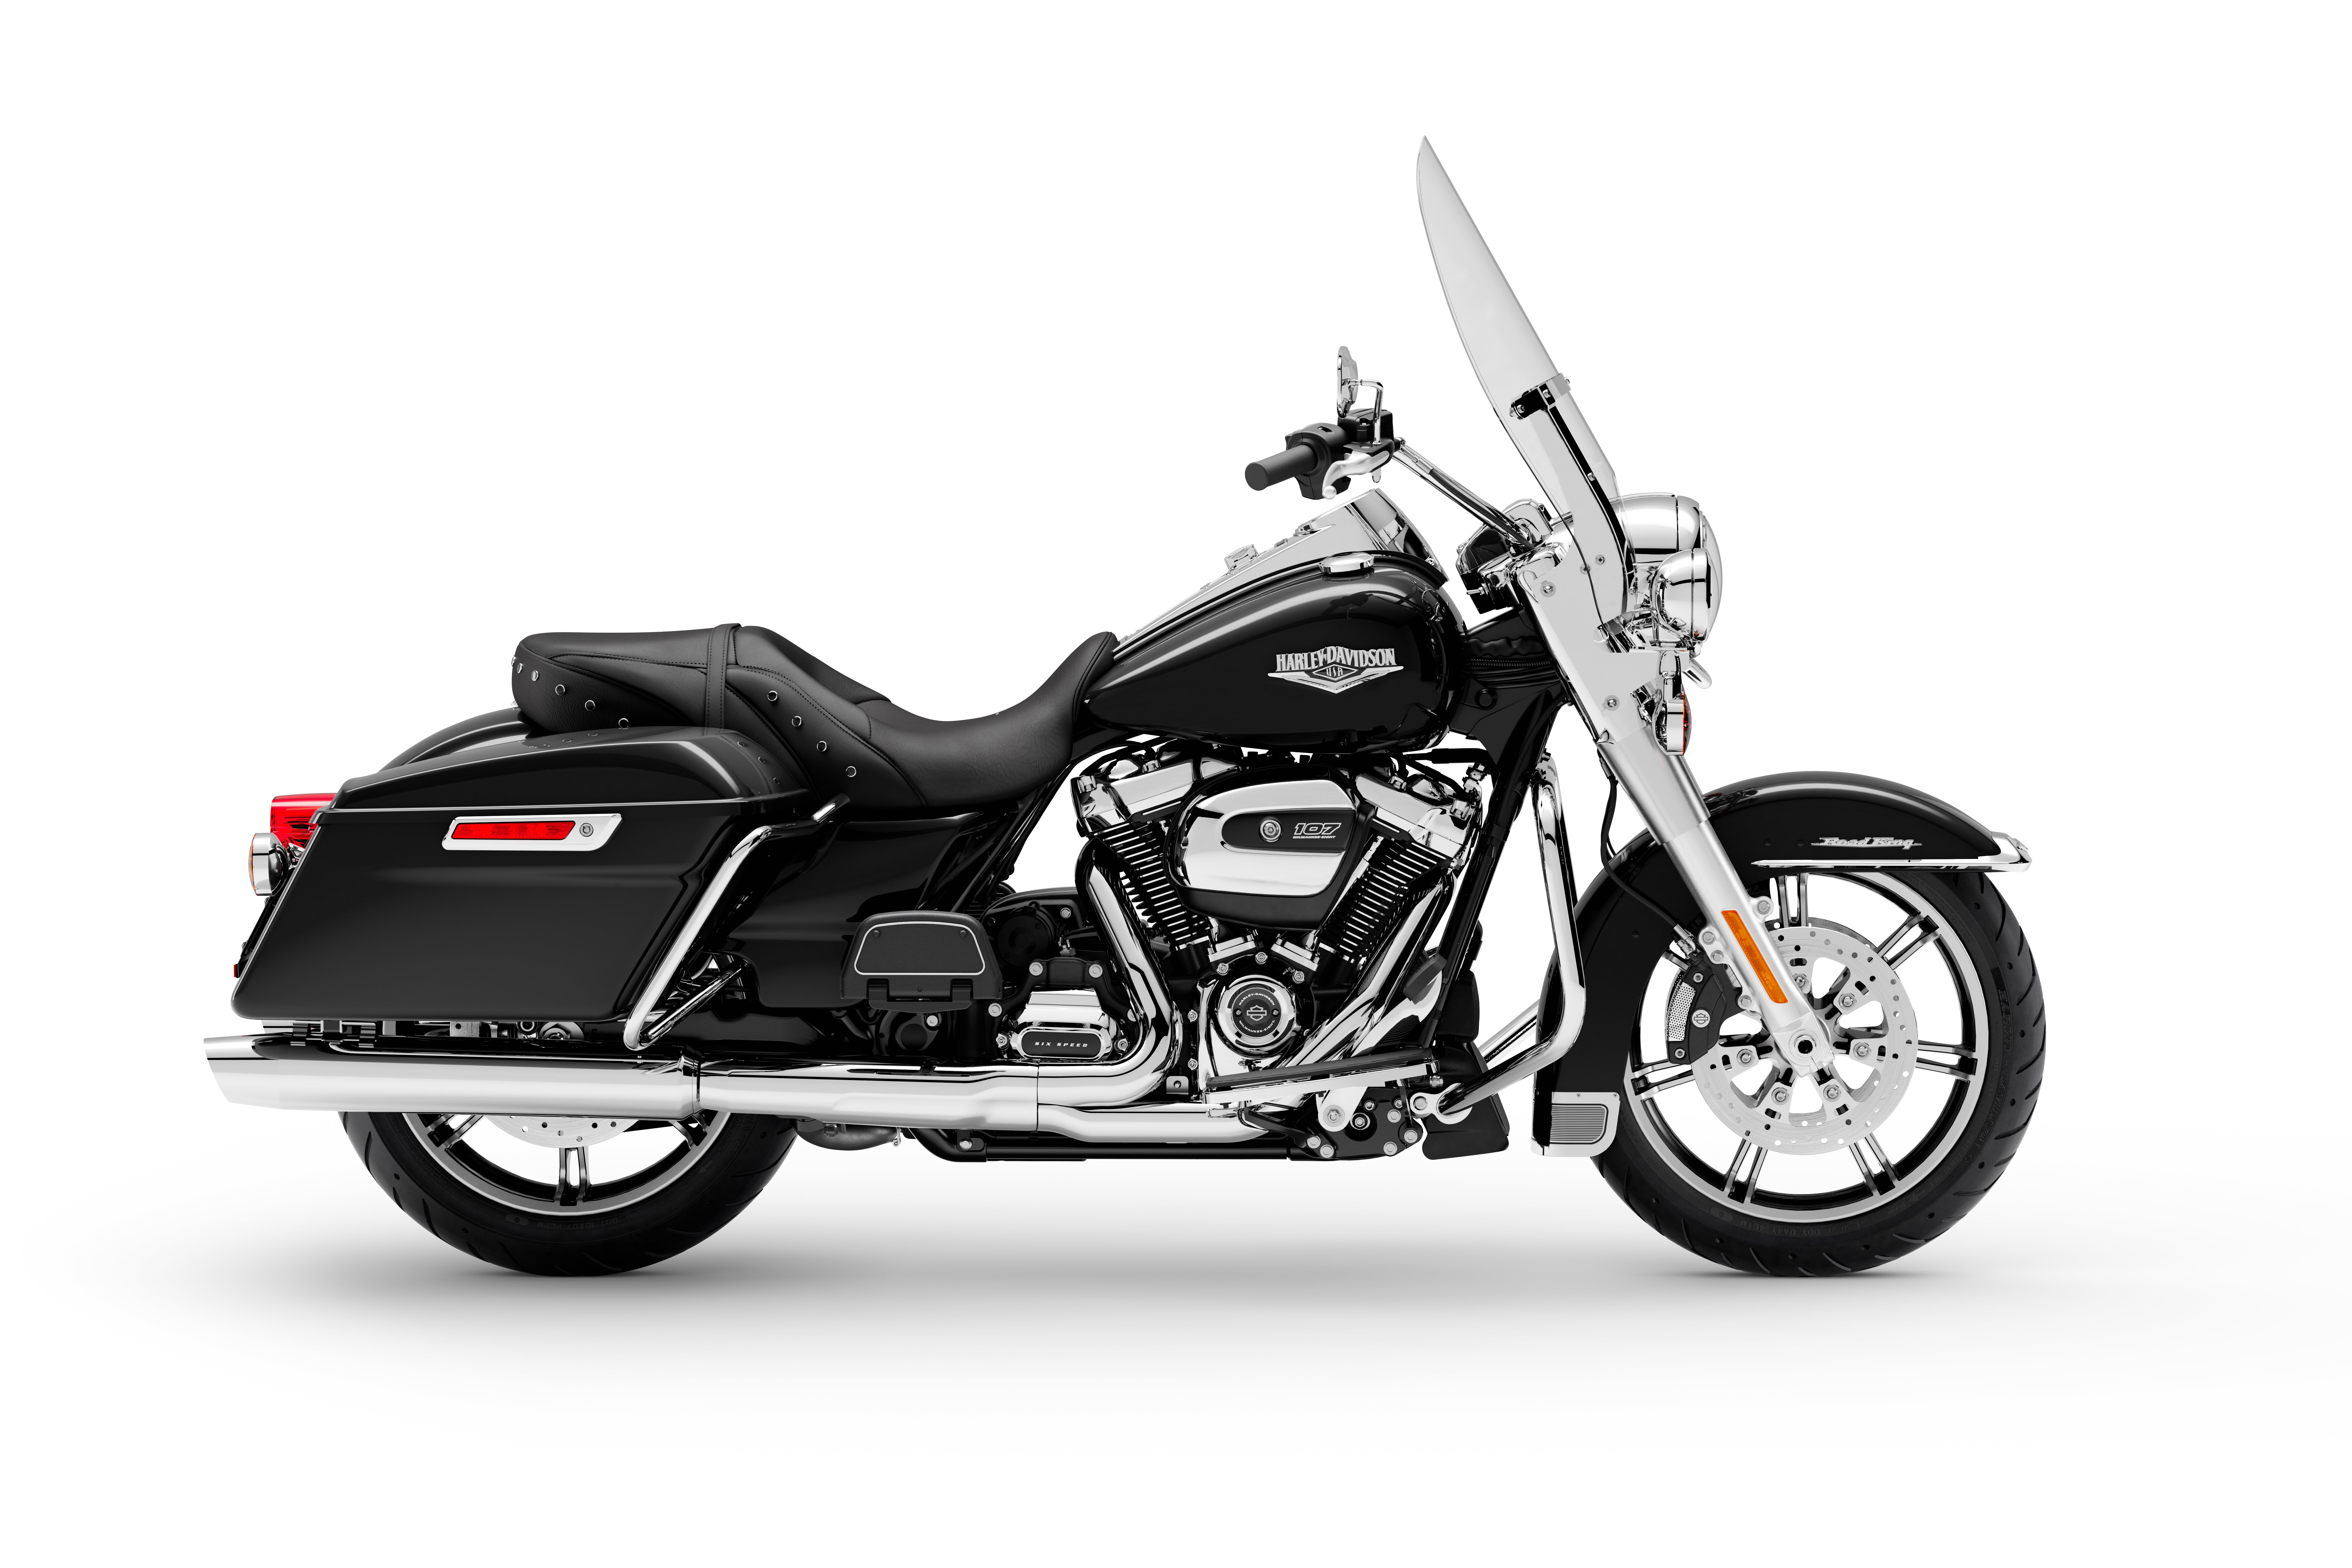 2021 Harley-Davidson Road King [9]